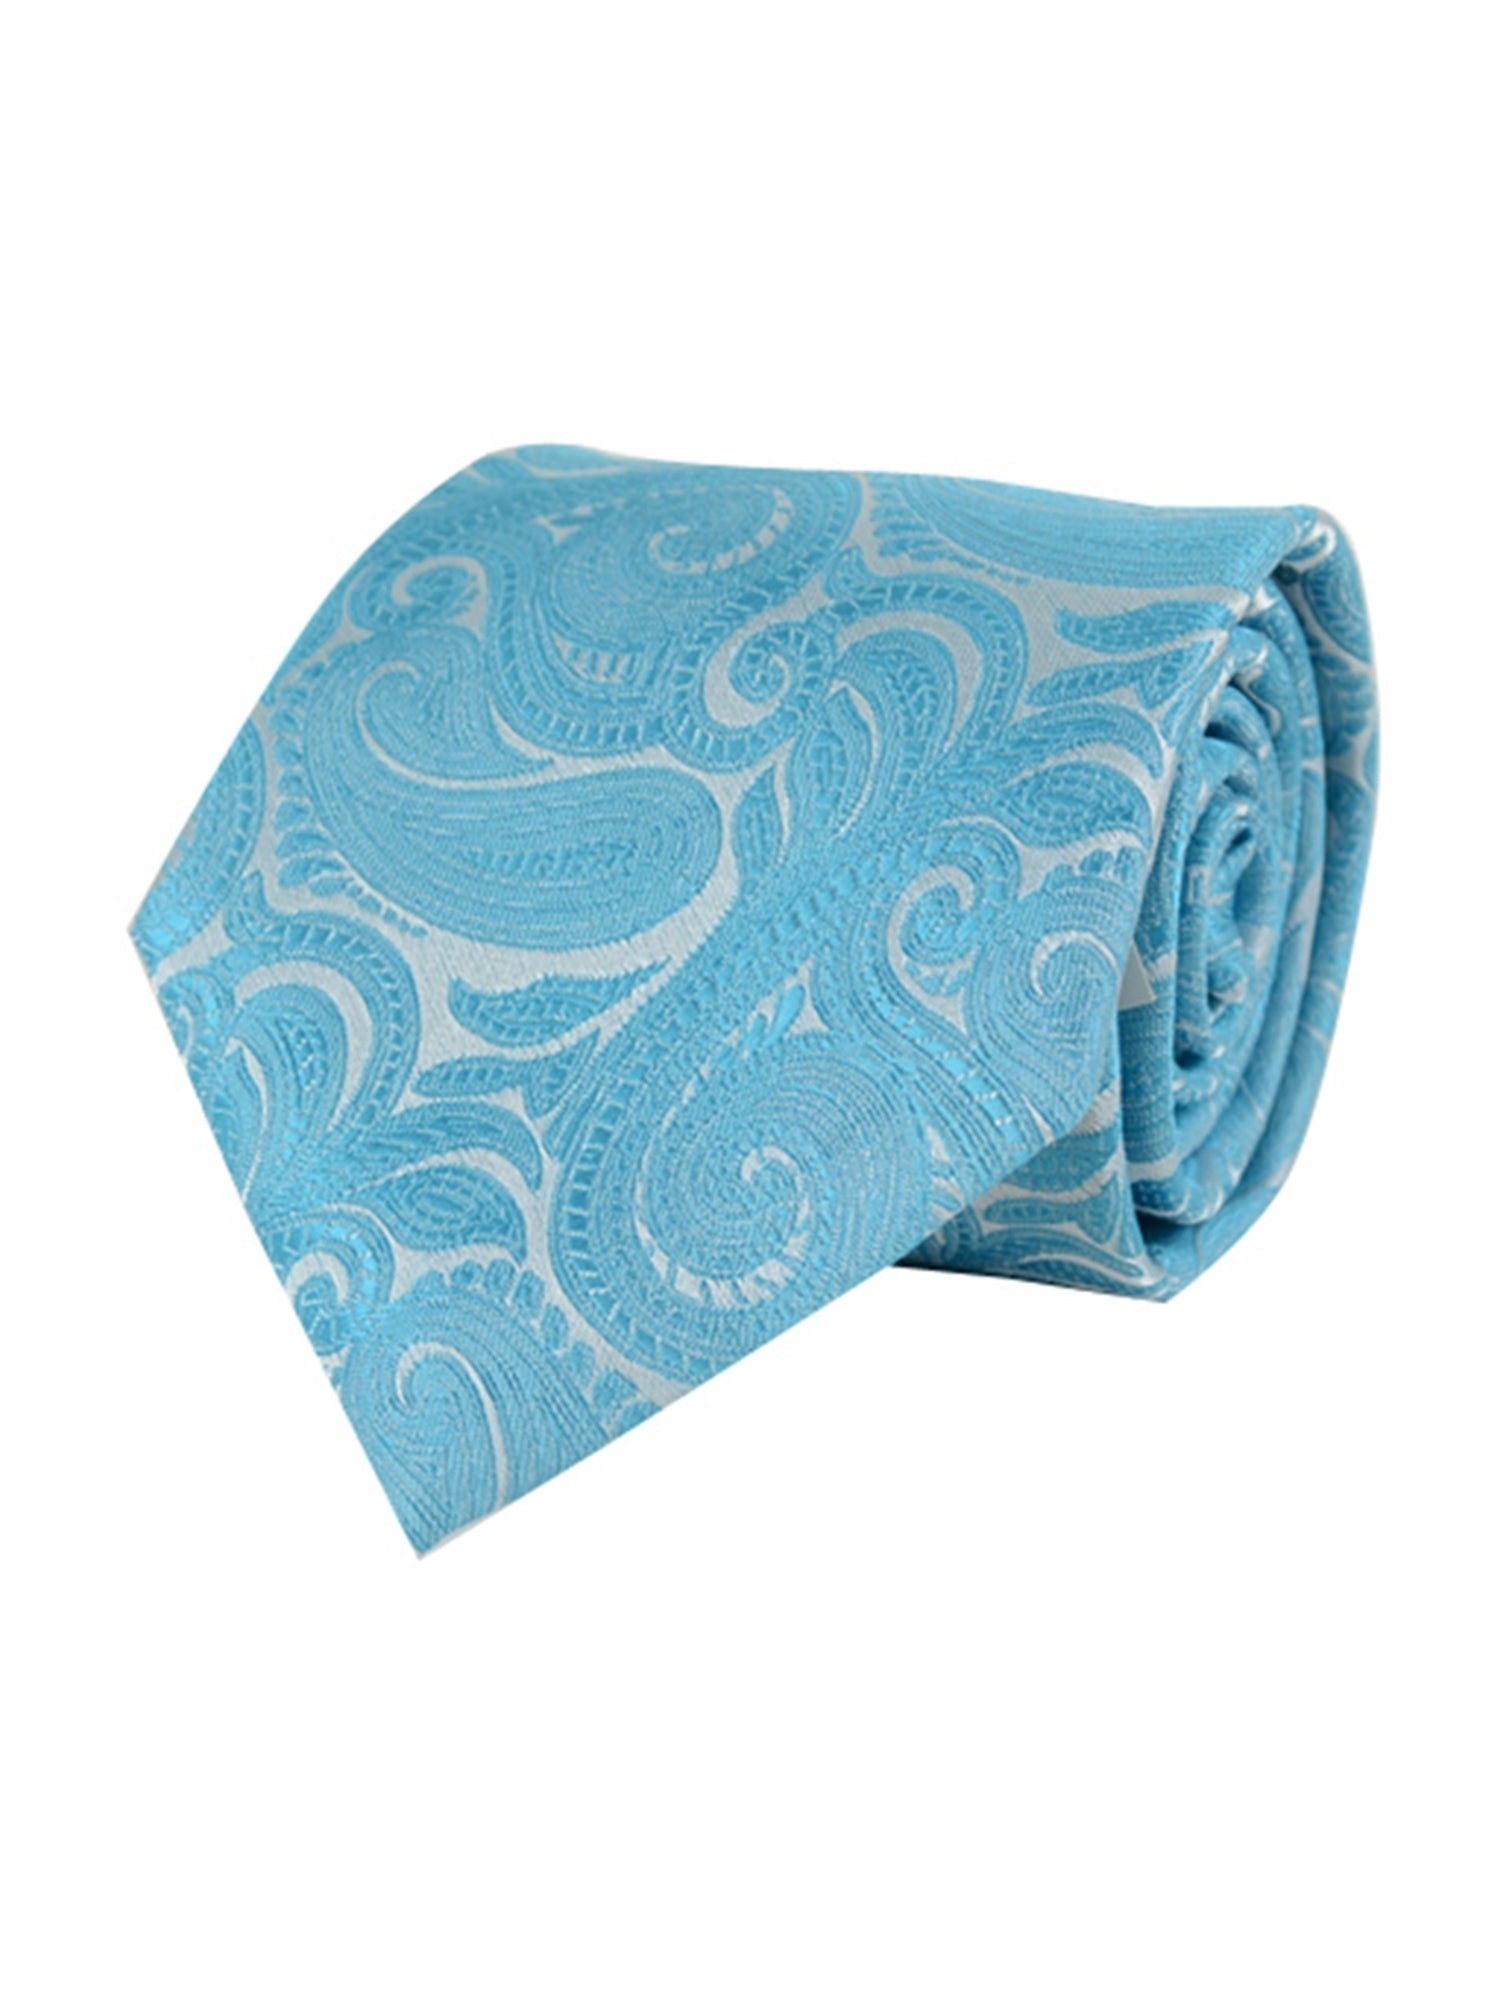 Men's Paisley Microfiber Poly Woven Wedding Neck Tie Neck Tie TheDapperTie Turquoise Regular 